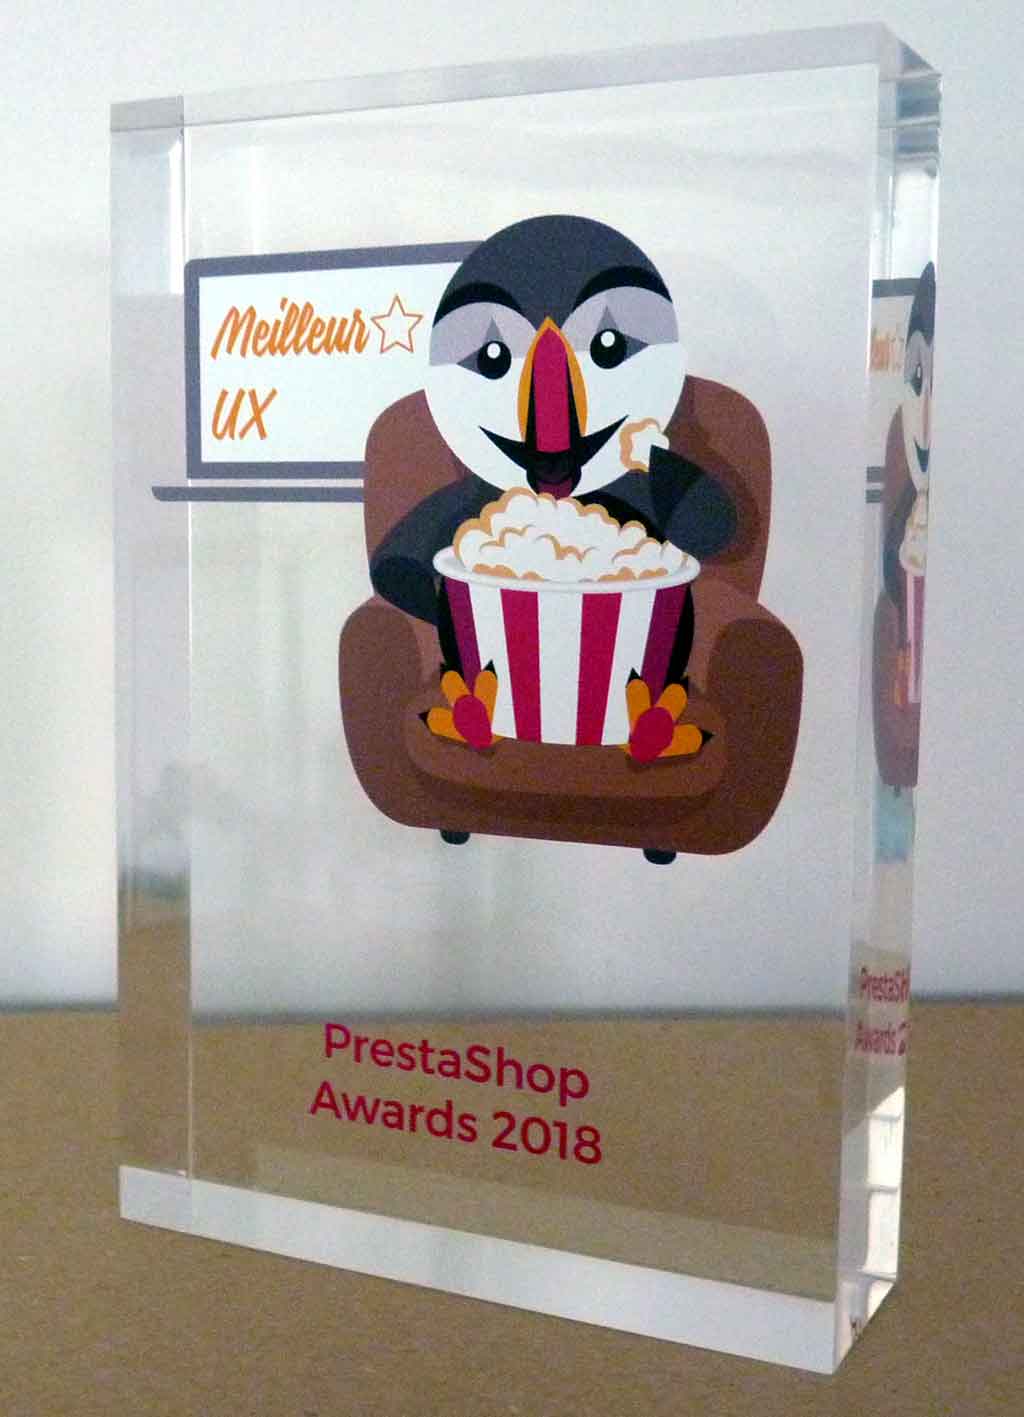 Prestashop Awards 2018 - Meilleur UX